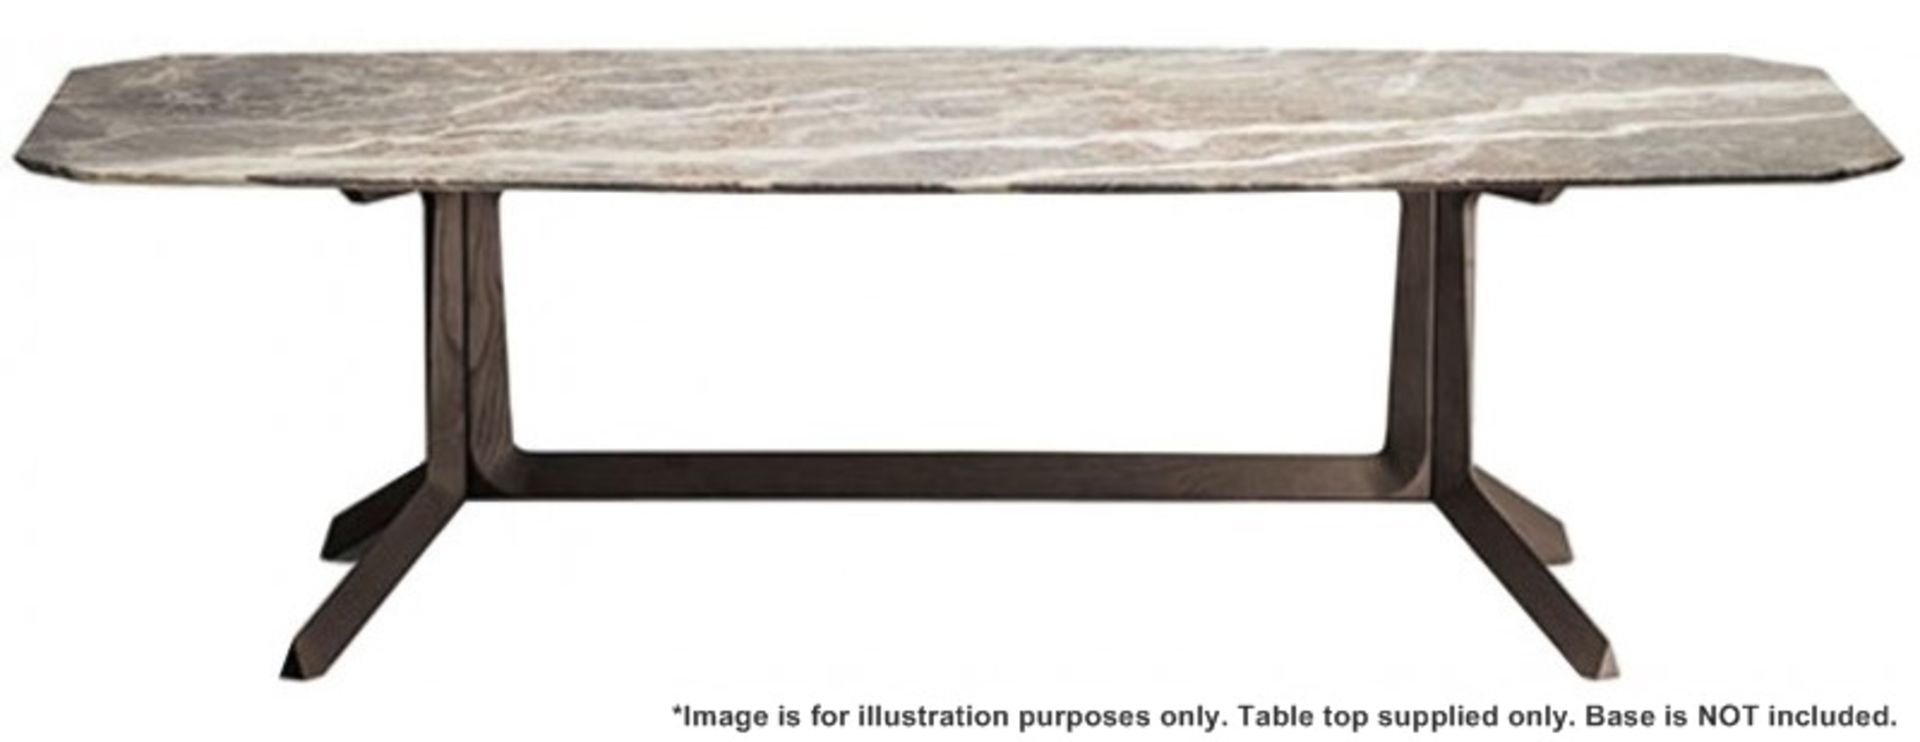 1 x POLTRONA FRAU 'Othello' Fior Di Pesco 2.6 Metre Long Marble Table Top - Dimensions: 260x100cm